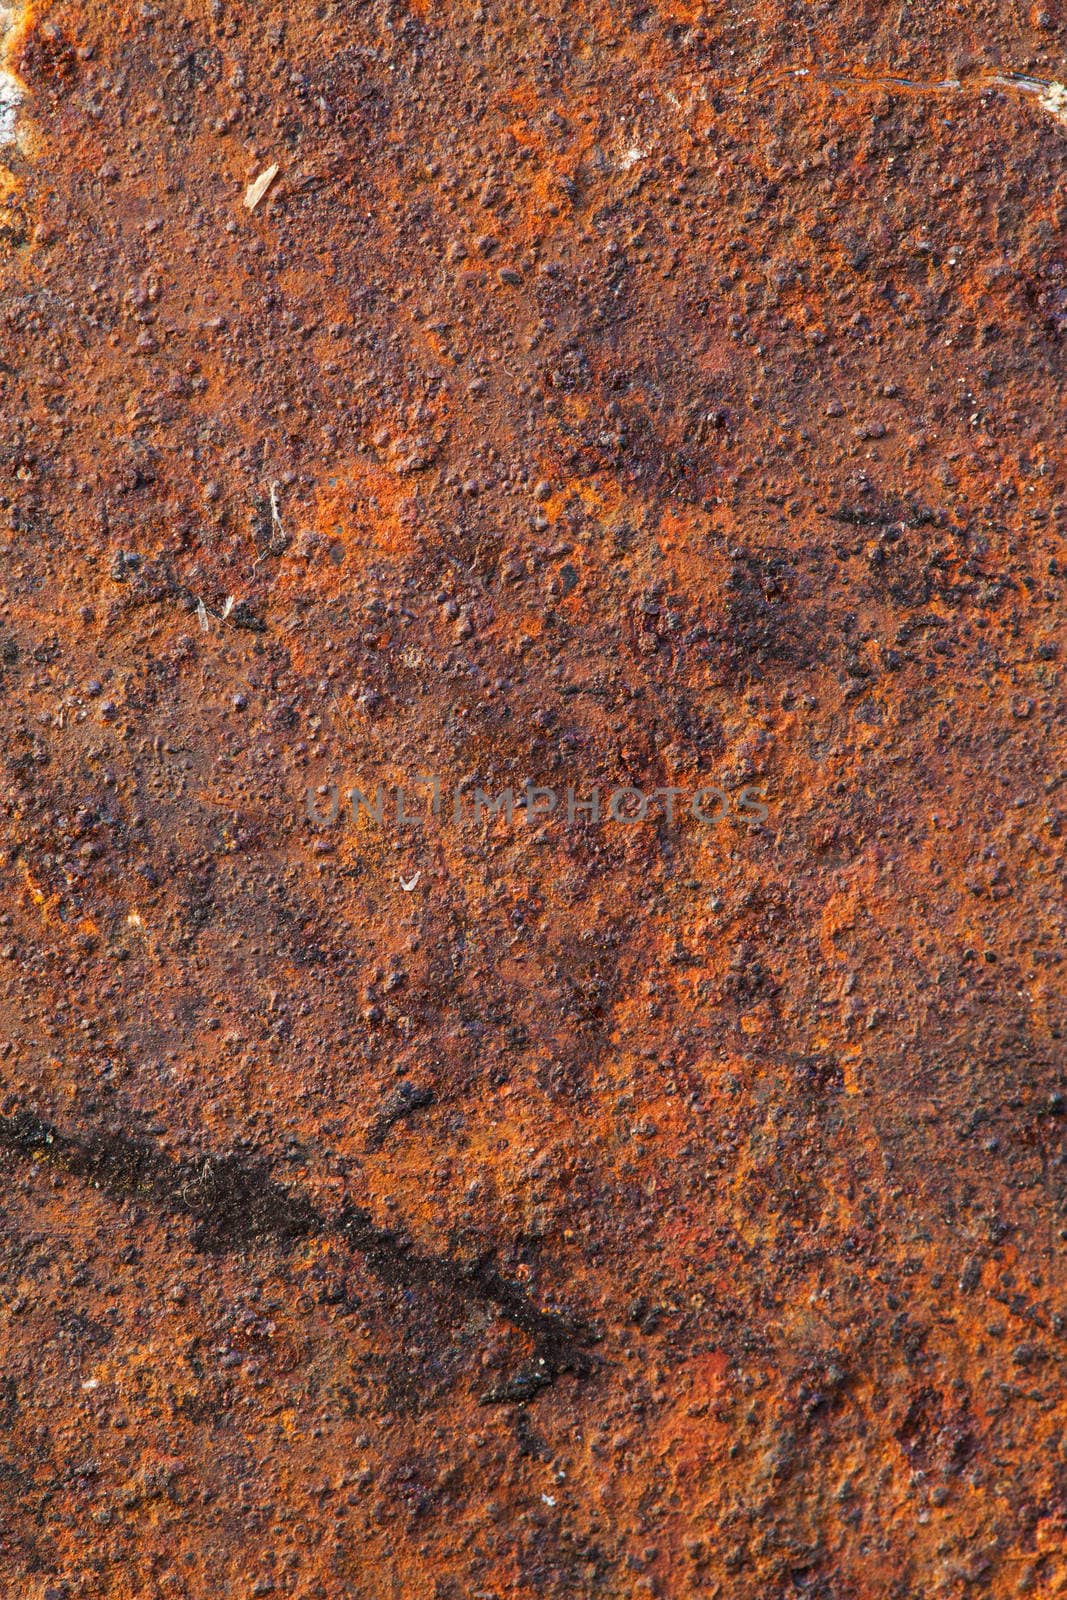 Image of rusty surface. Closeup macro